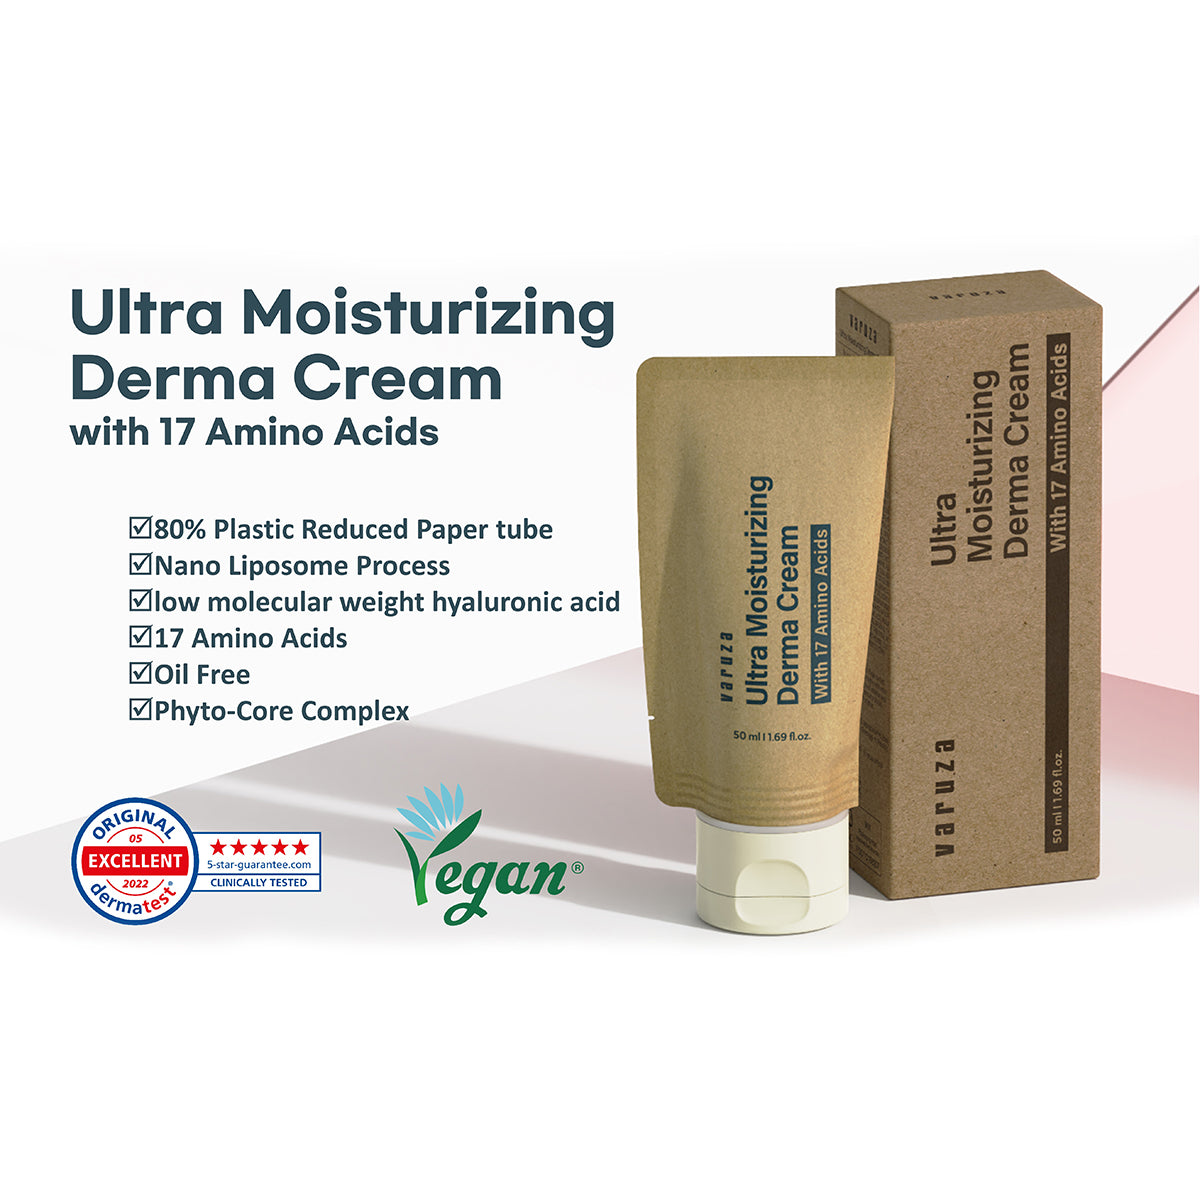 Ultra Moisturizing Derma Cream with 17 Amino Acids